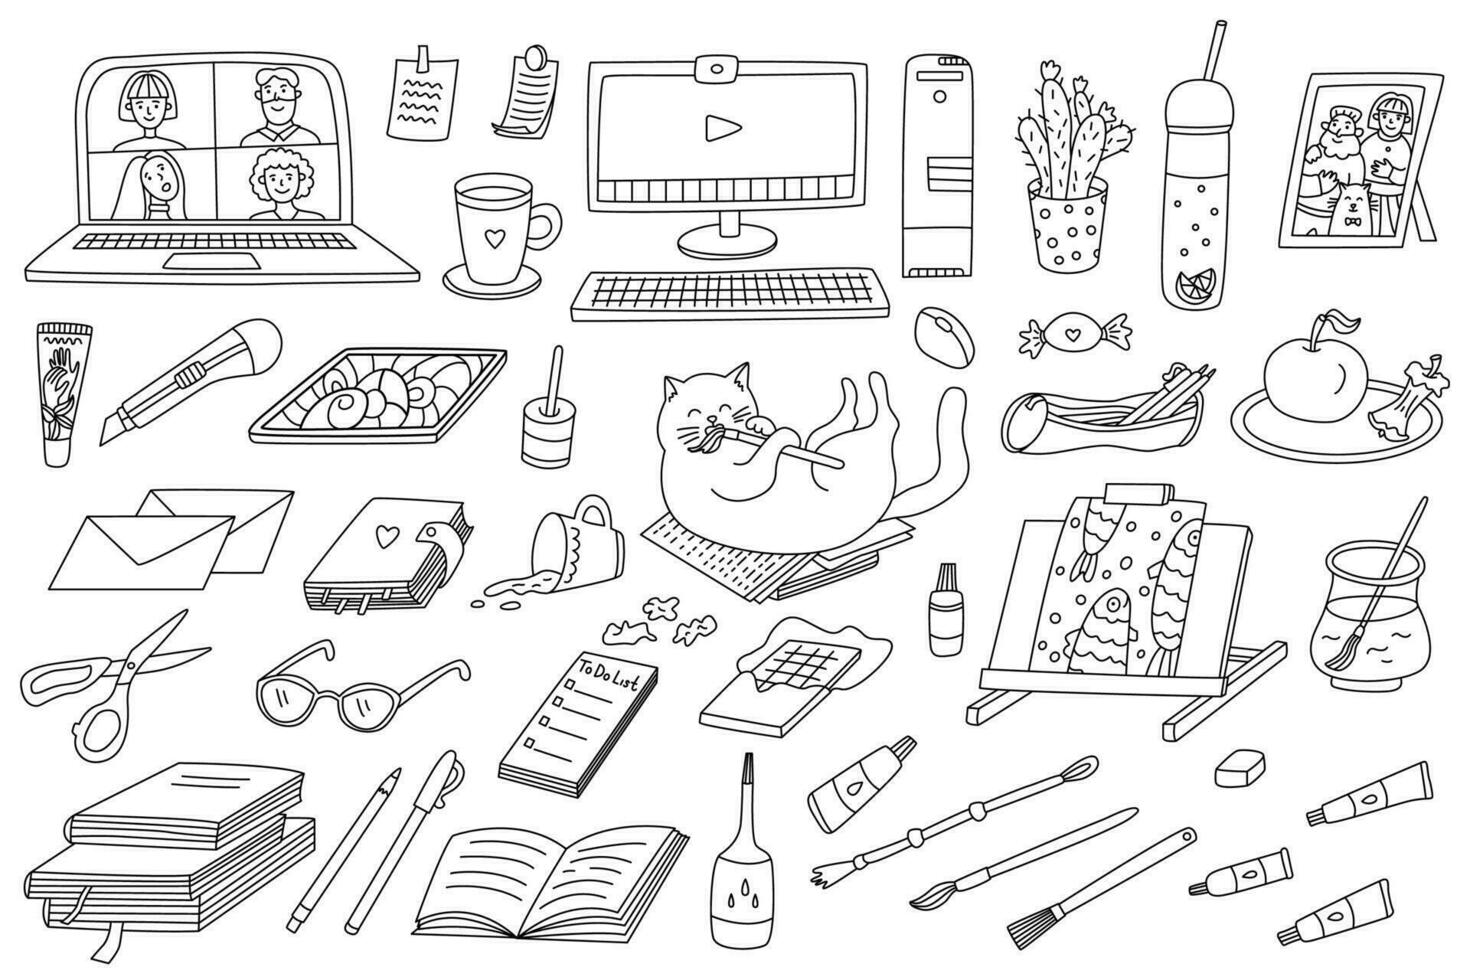 Designer, artist or freelancer workplace set. Home office vector doodle hand drawn illustration black outline. Stationary, computers and work tools